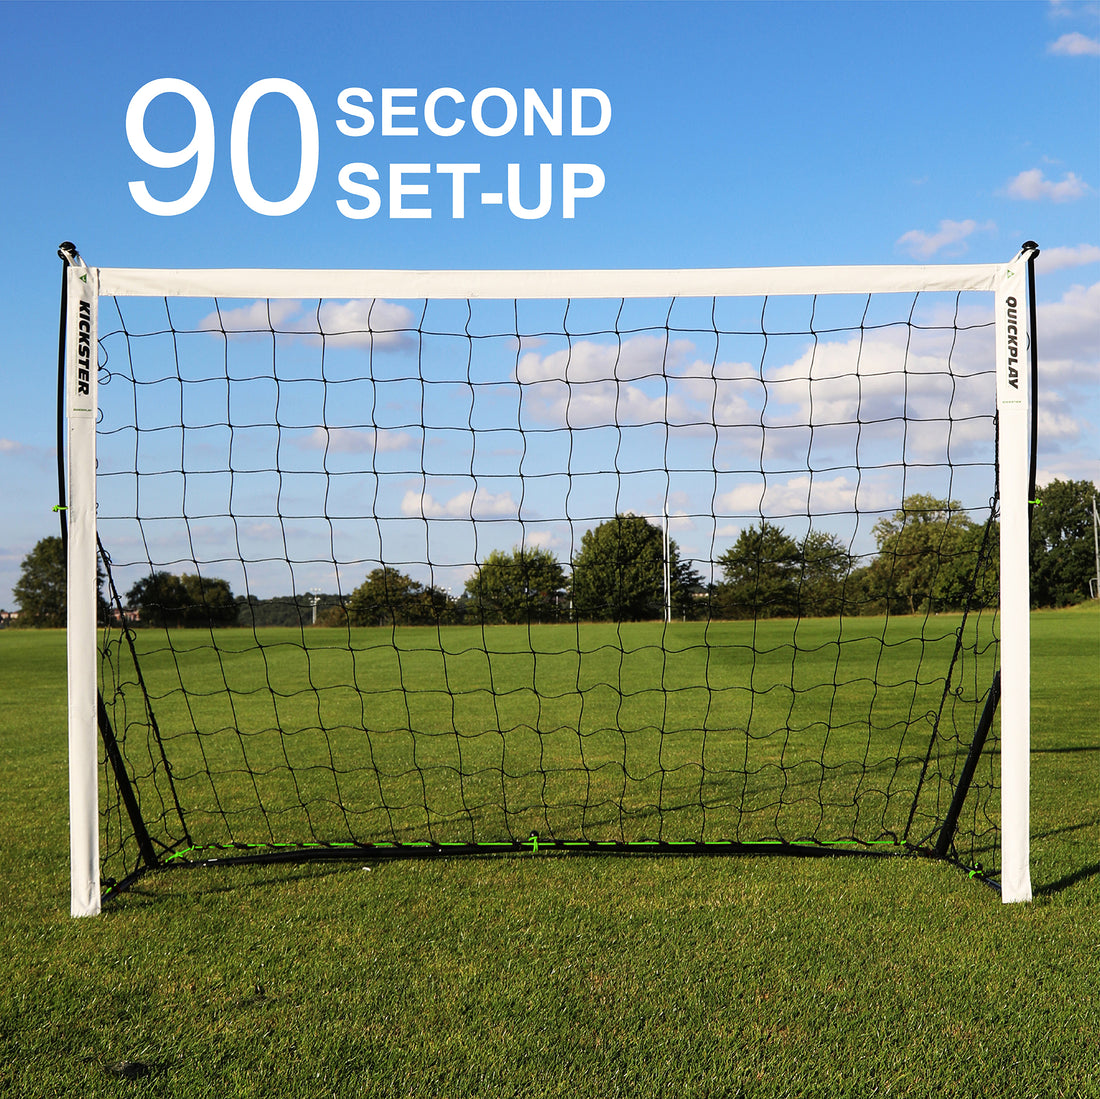 KICKSTER 18.5x6.6' Portable Soccer Goal U9 & U10